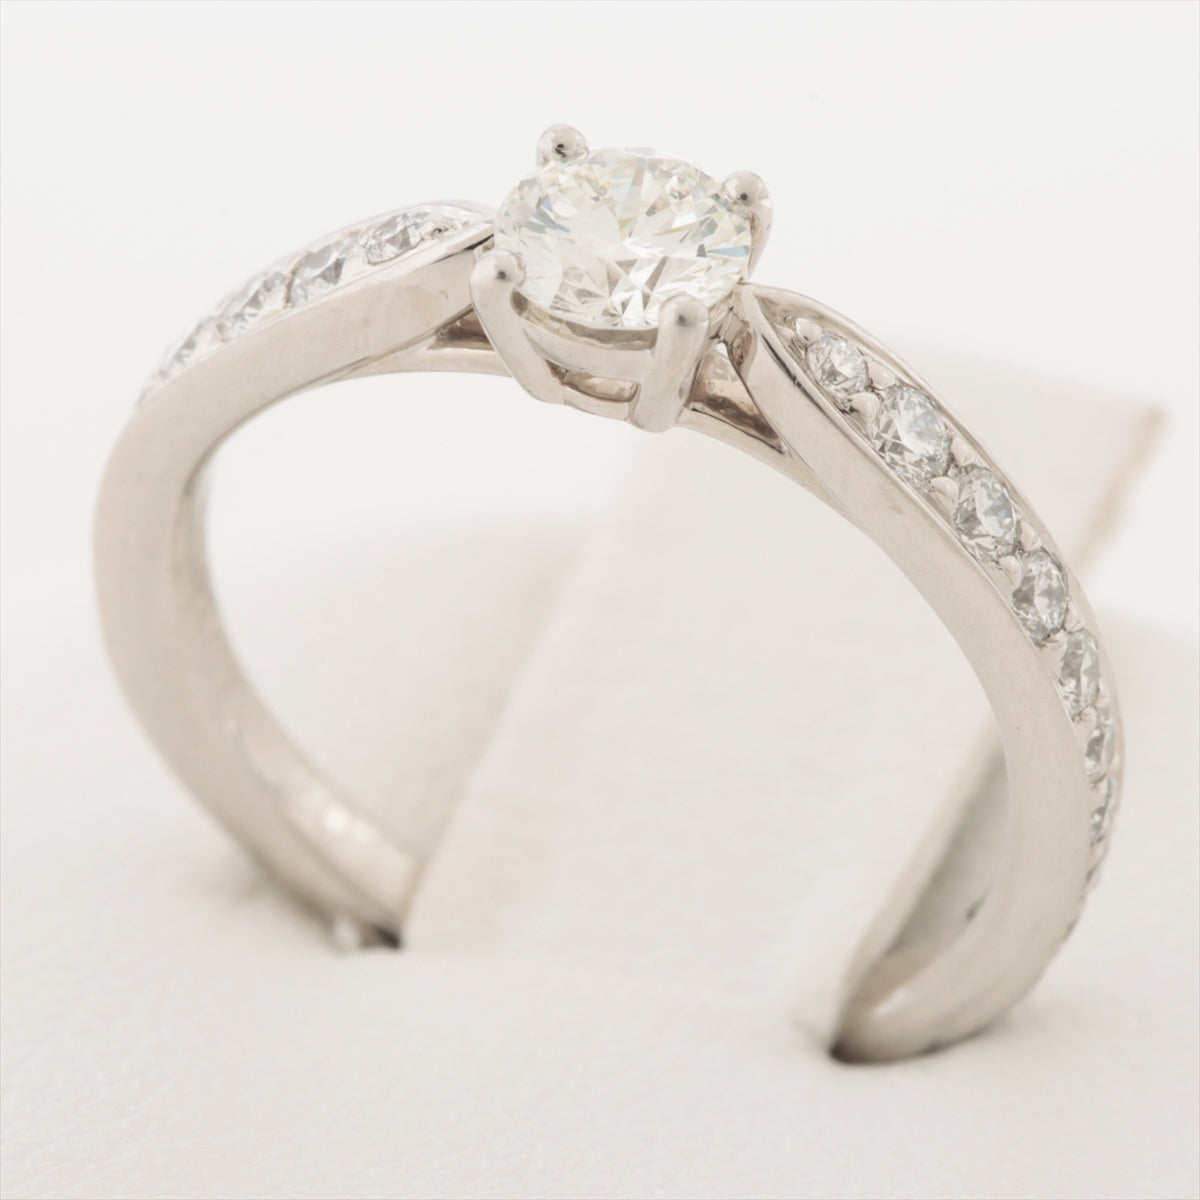 Tiffany Harmony Half-Circle Diamond Ring Pt950 2.8g D0.24 I IF 3EX NONE NONE